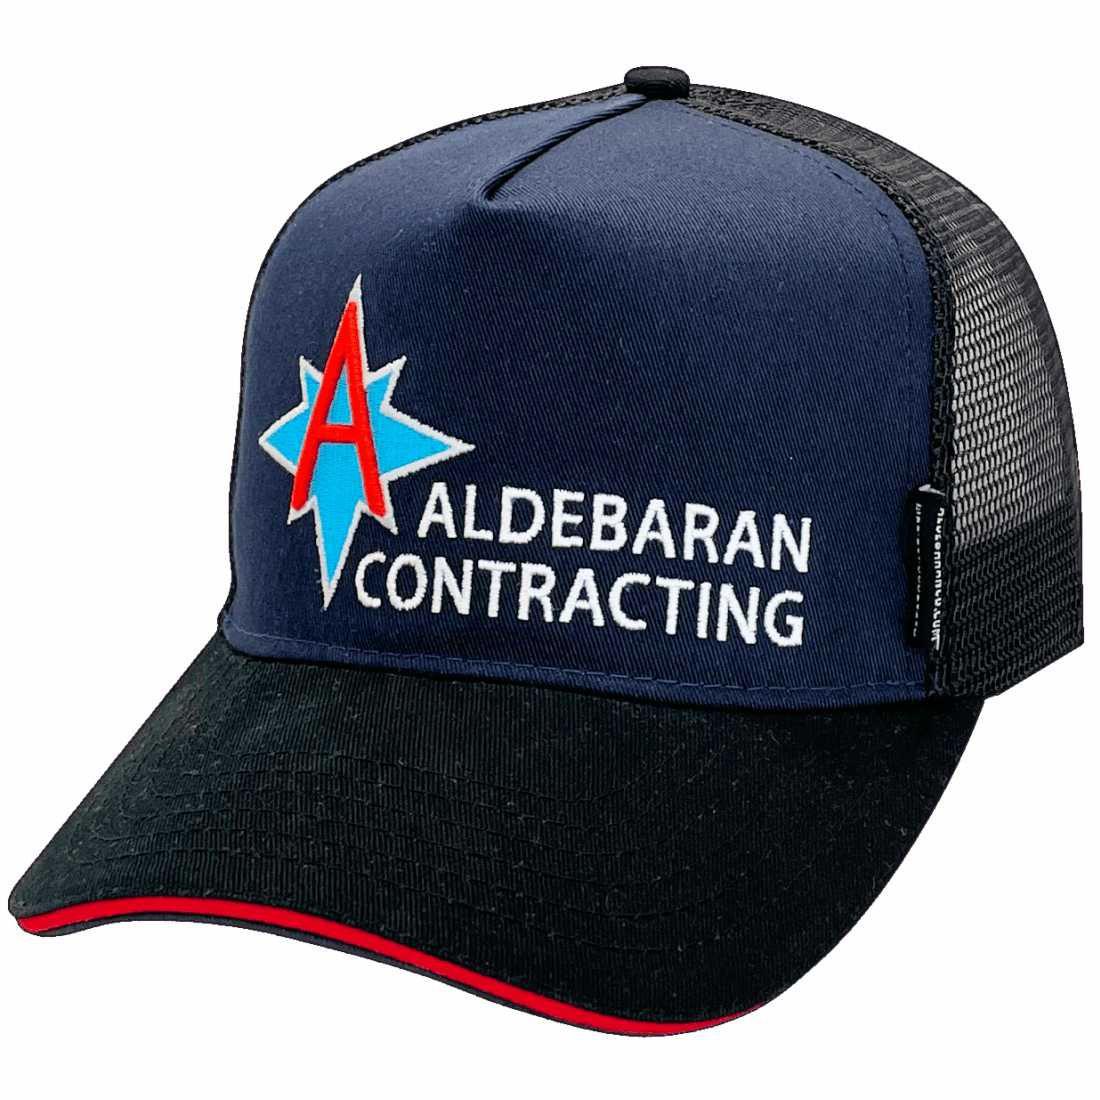 Aldebaran Contracting NT - Original Power Aussie Trucker Hat with Australian Head Fit Crown